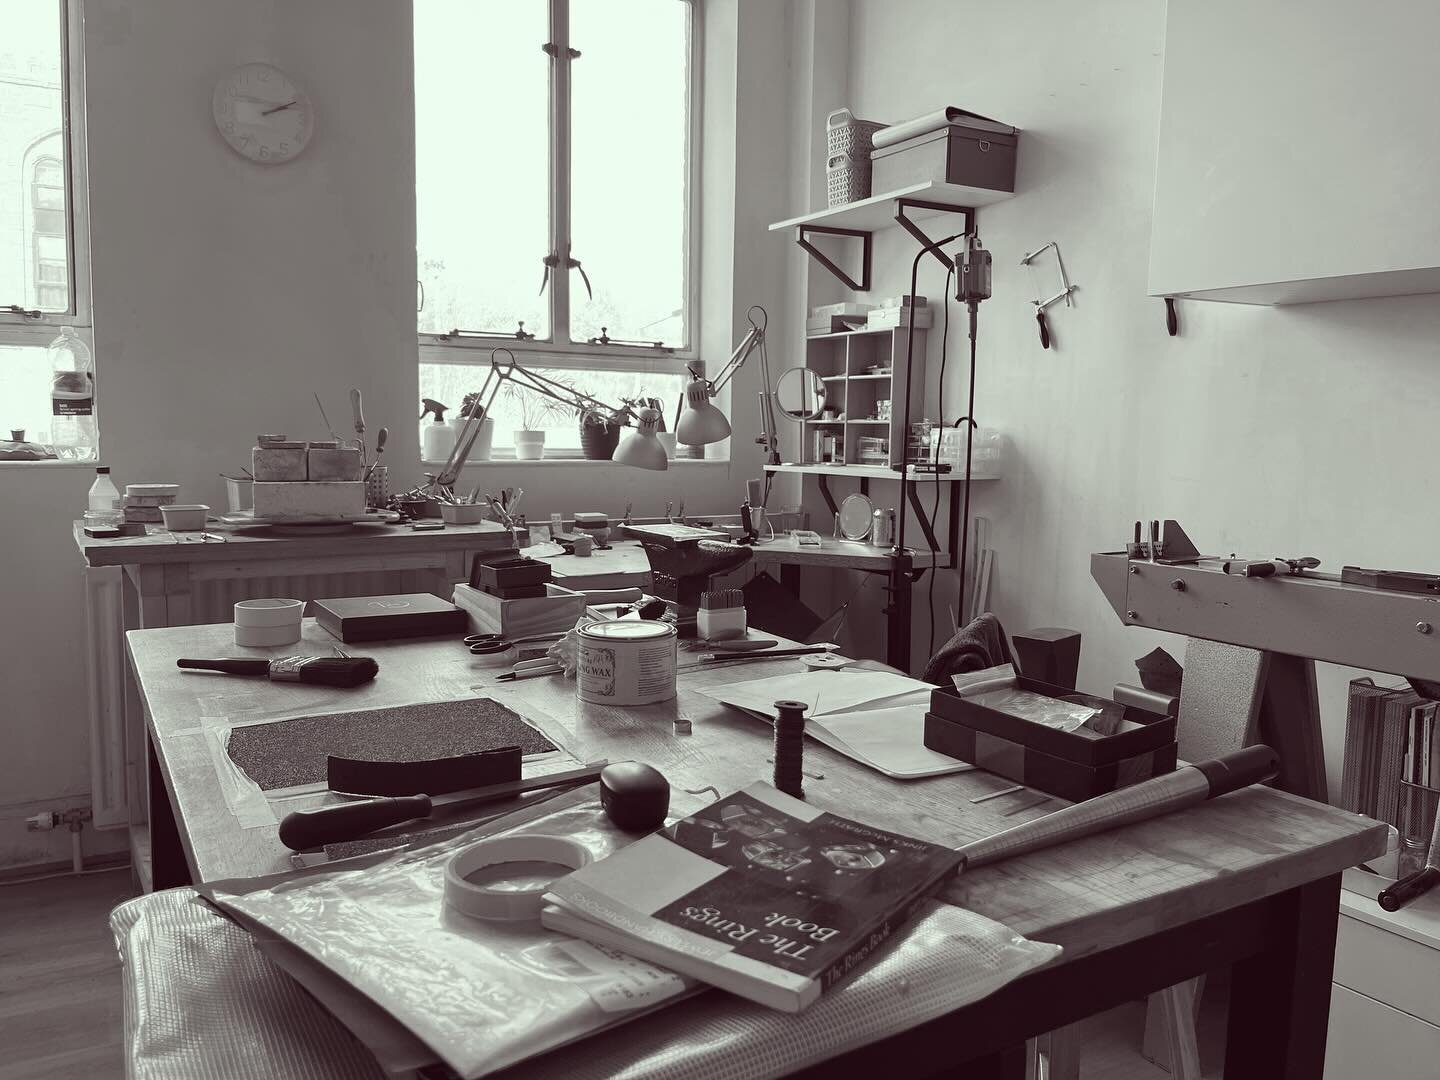 Studio studioing #silvermithing #jewellery #mondays